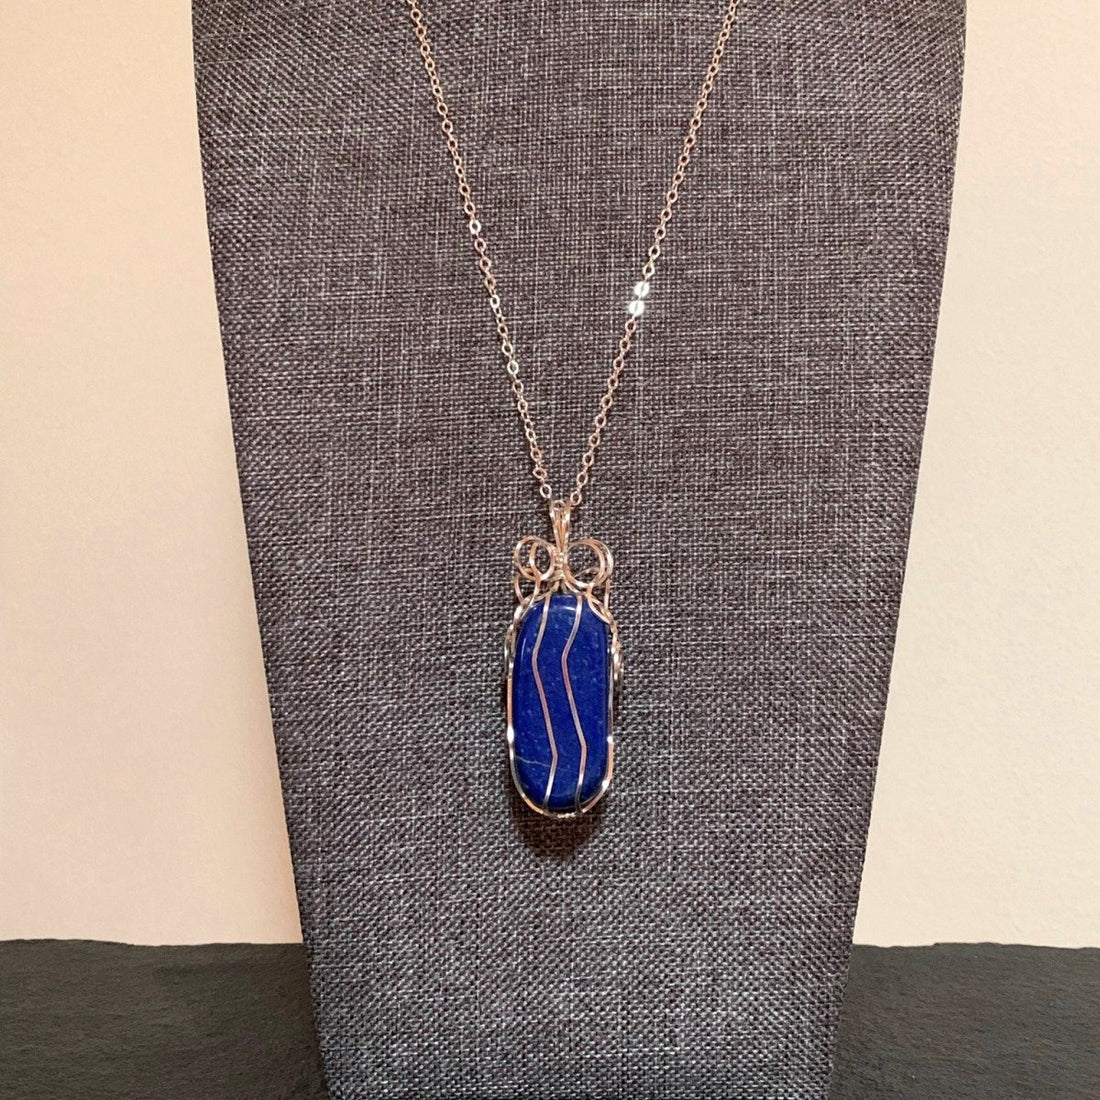 Pendant made of Blue Rectangle Lapis Lazuli stone w/ silver wrap; .75" x 2.1" incl bail